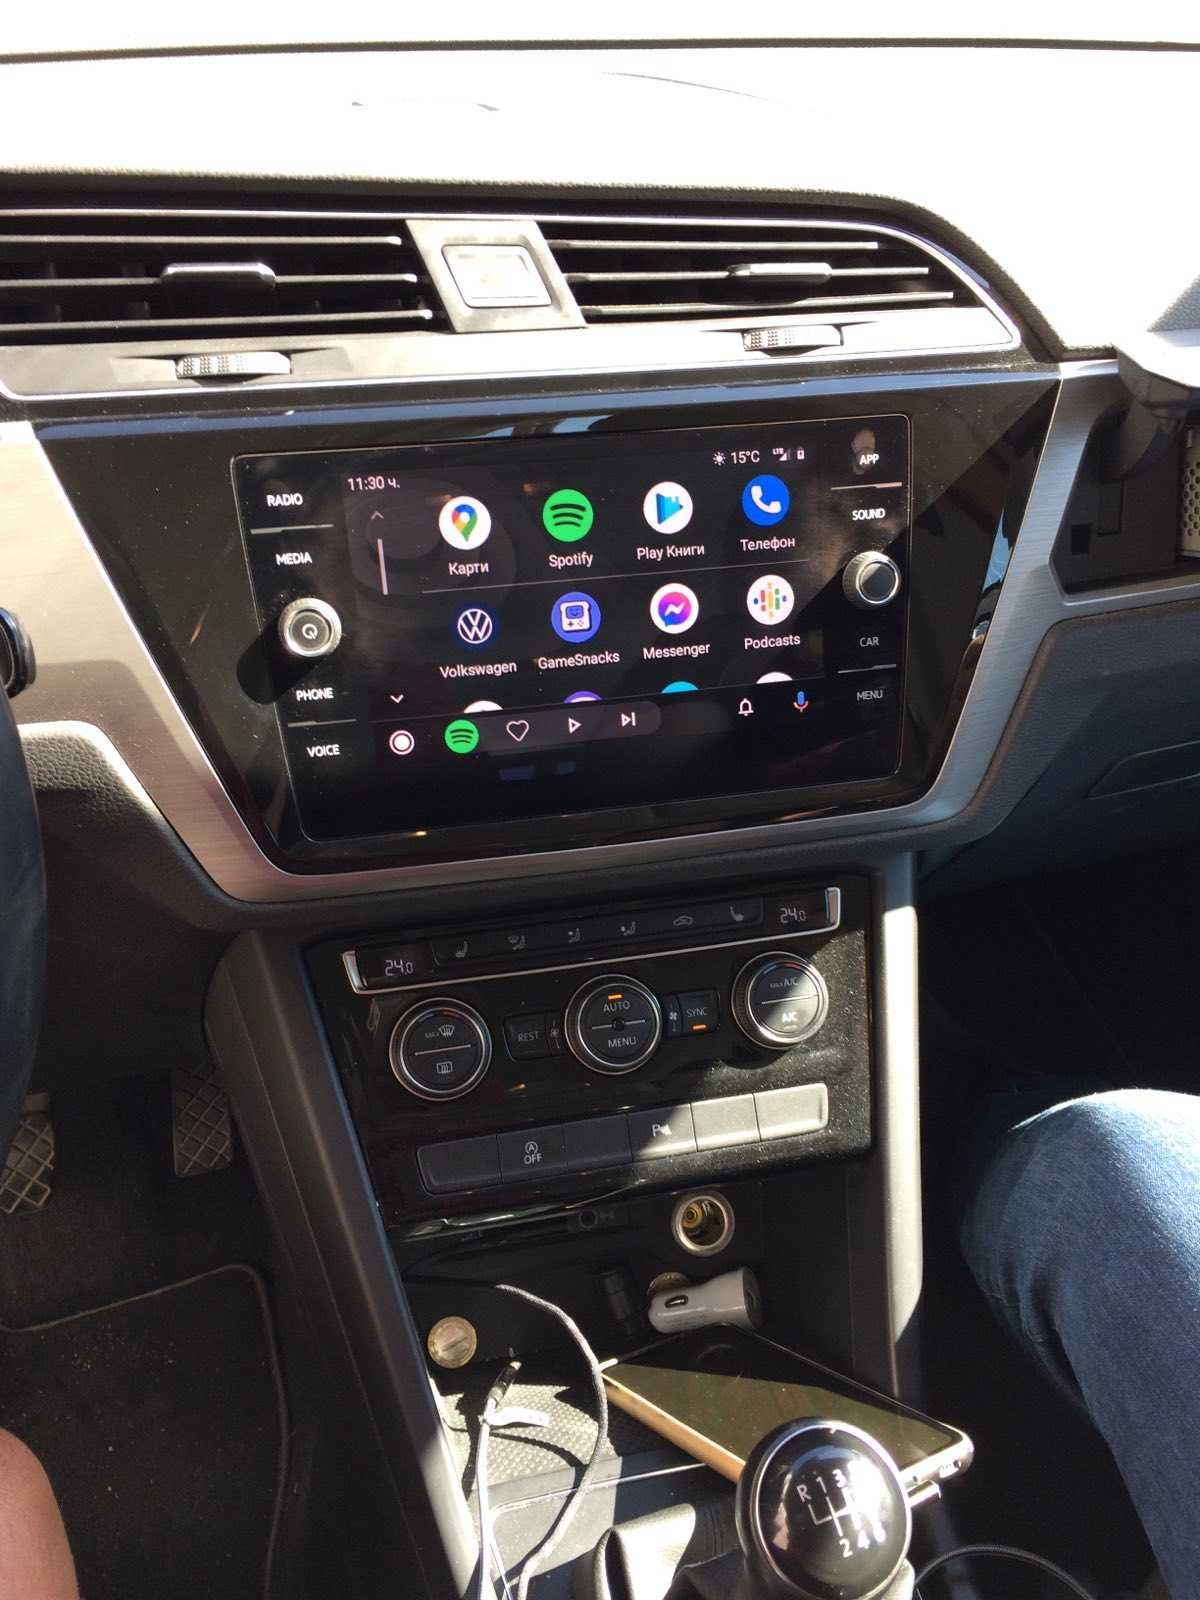 Apple CarPlay Vw Technisat Android Auto Delphi Volkswagen Seat Skoda